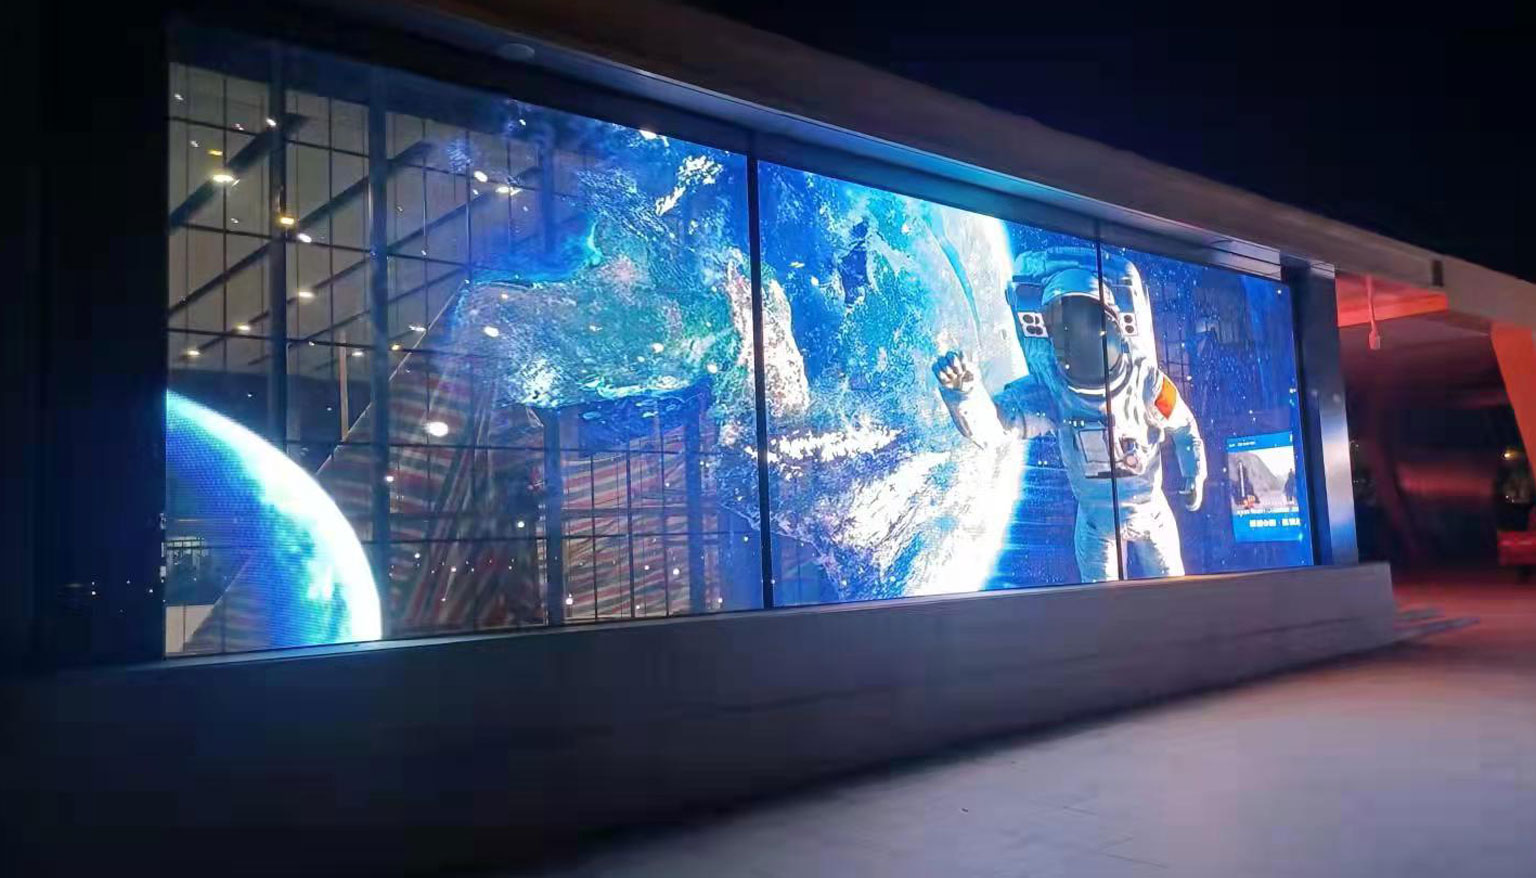 Xi'an subway station transparent screen P3.91 display effect